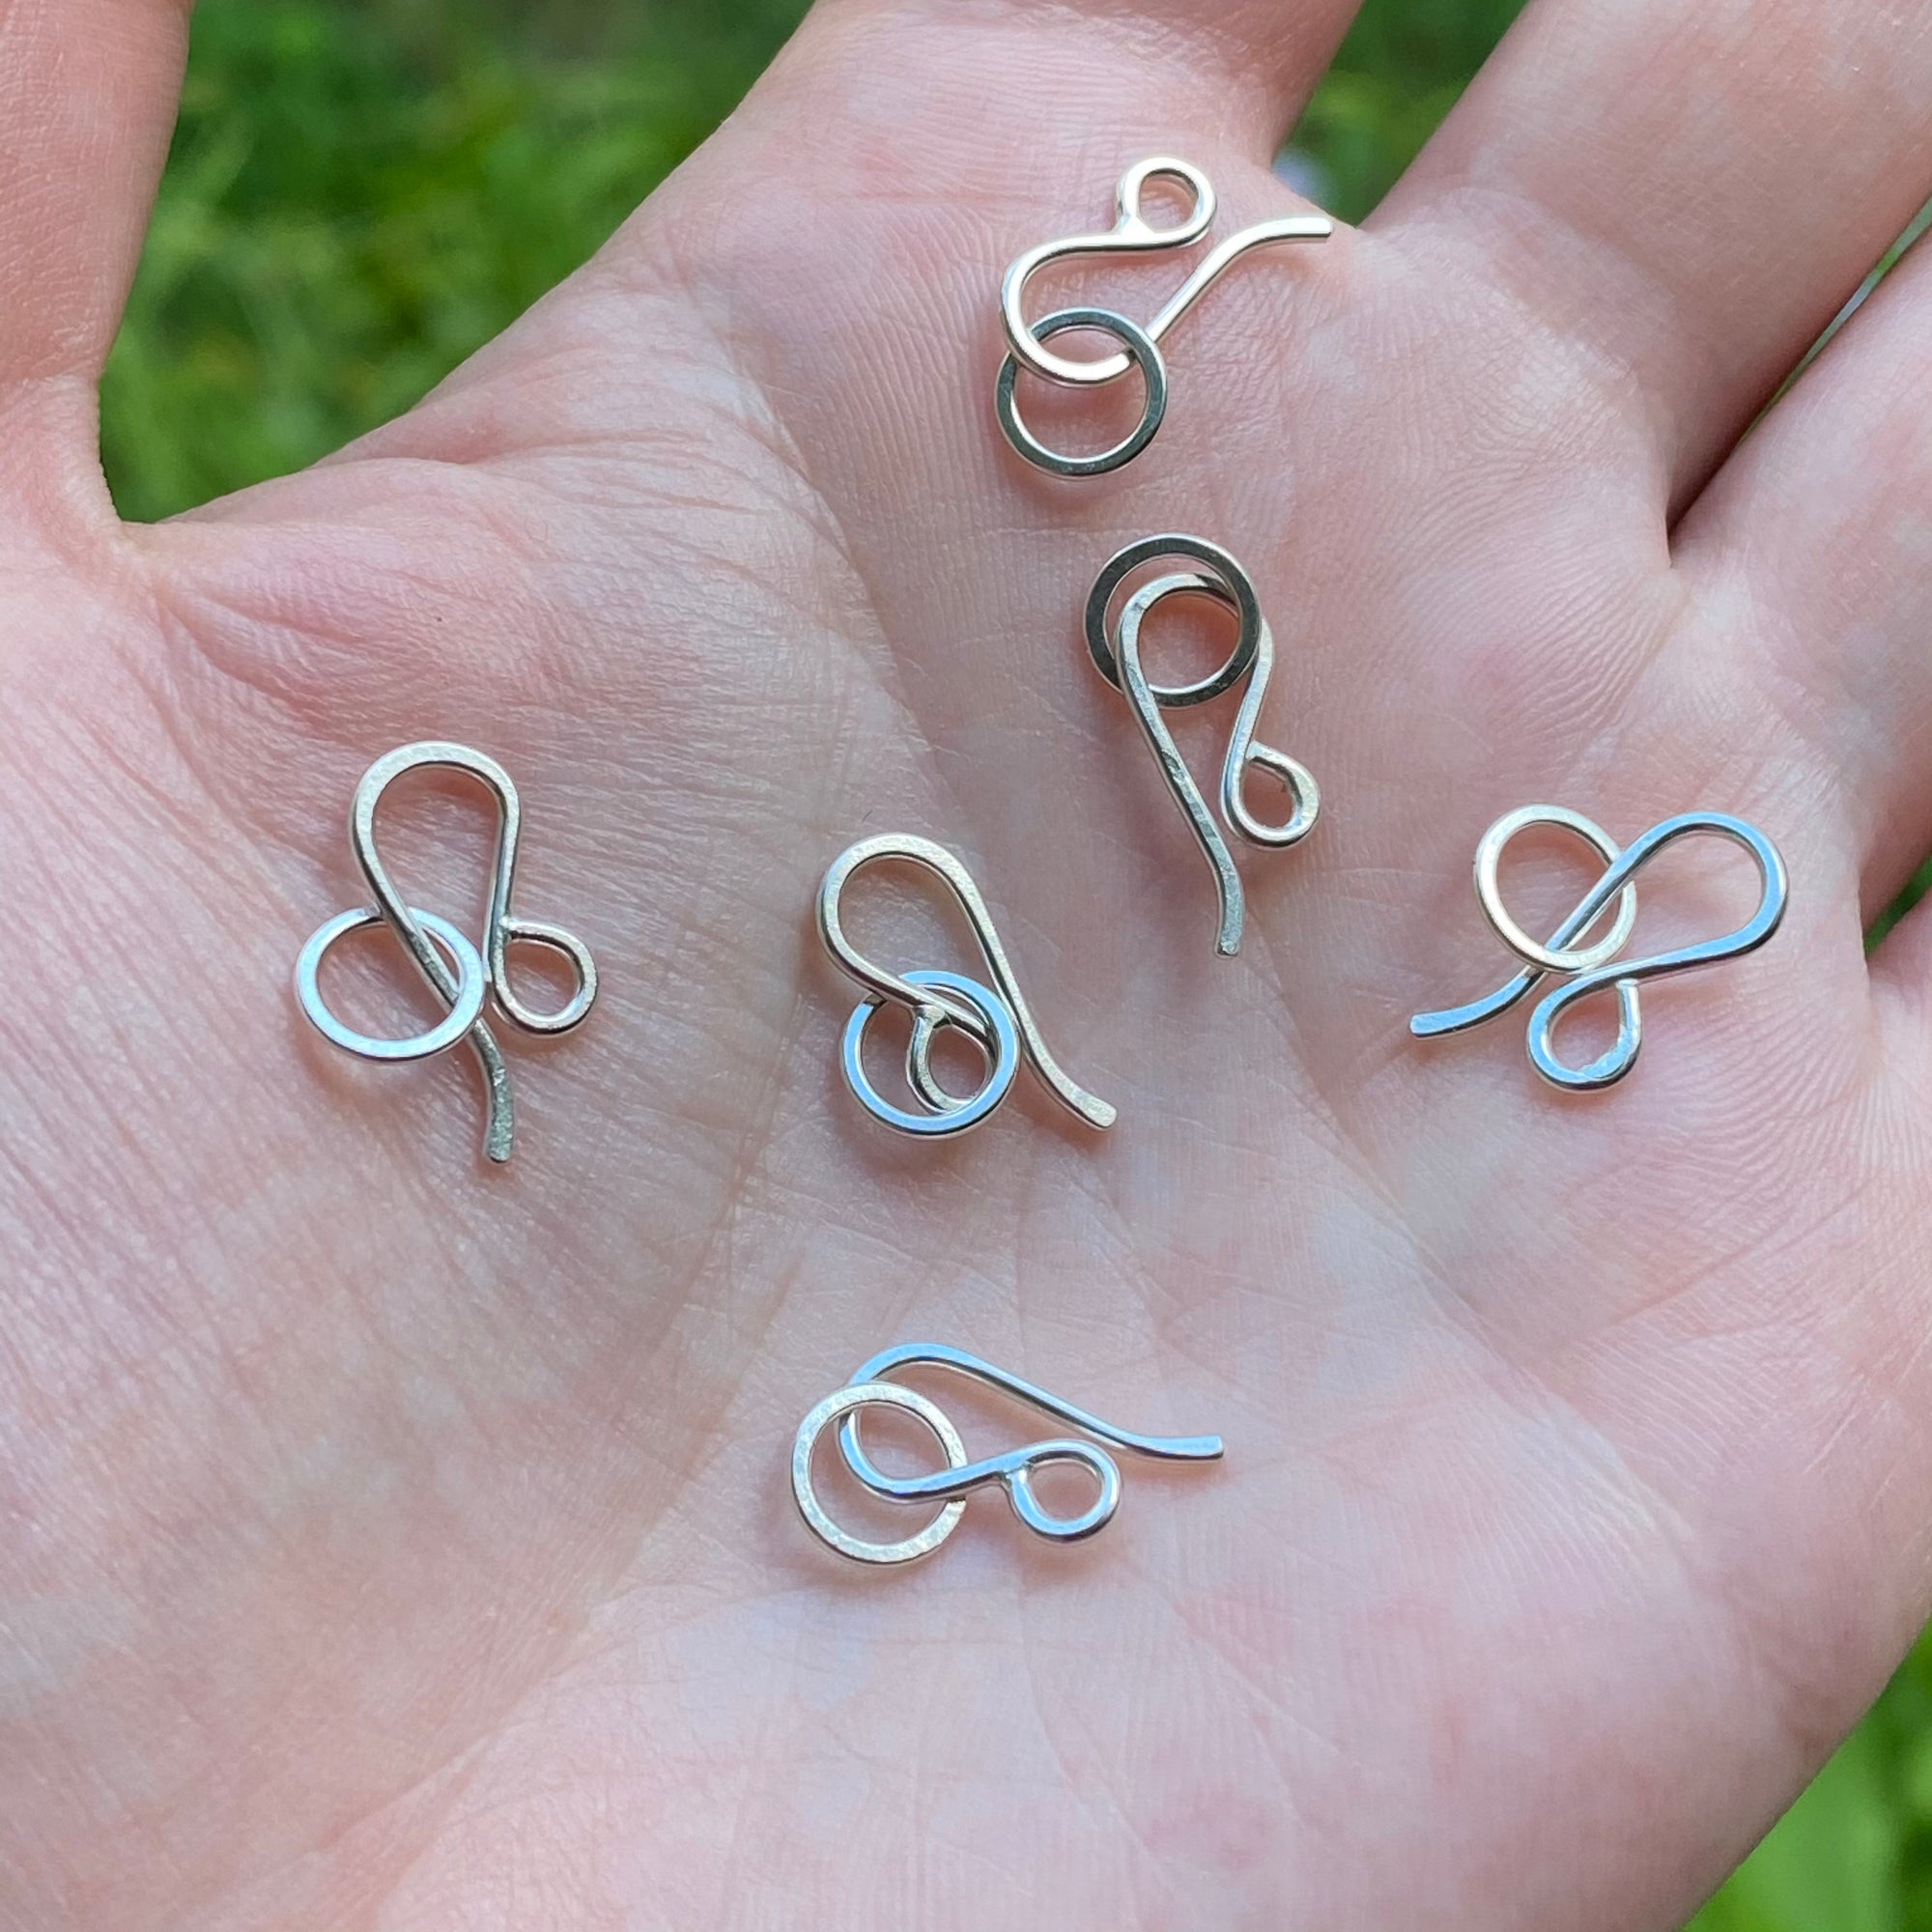 Hook & Eye Clasp for Necklace or Bracelet Add-on – Wisdom River Designs